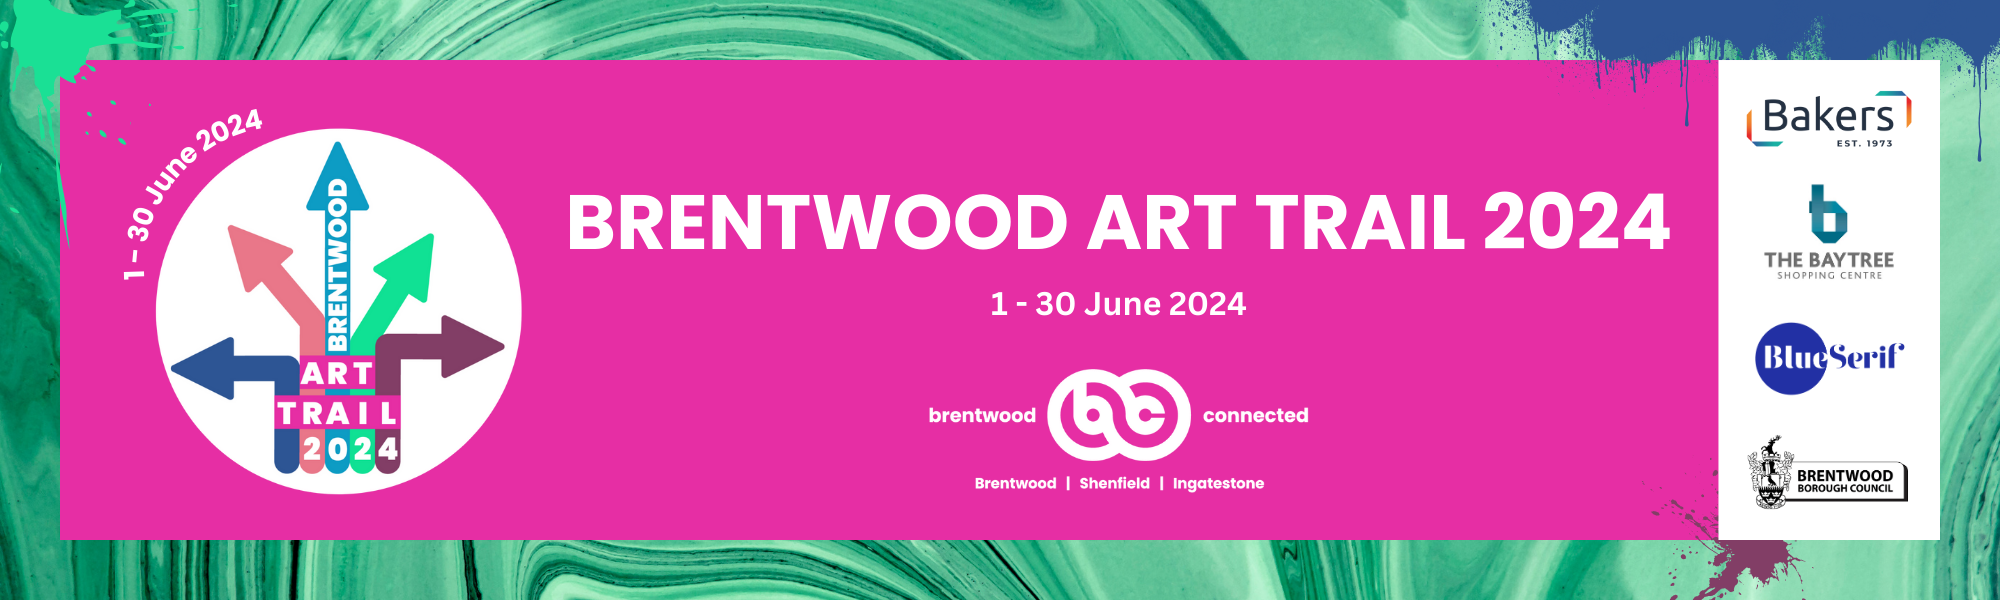 Brentwood Art Trail 2024